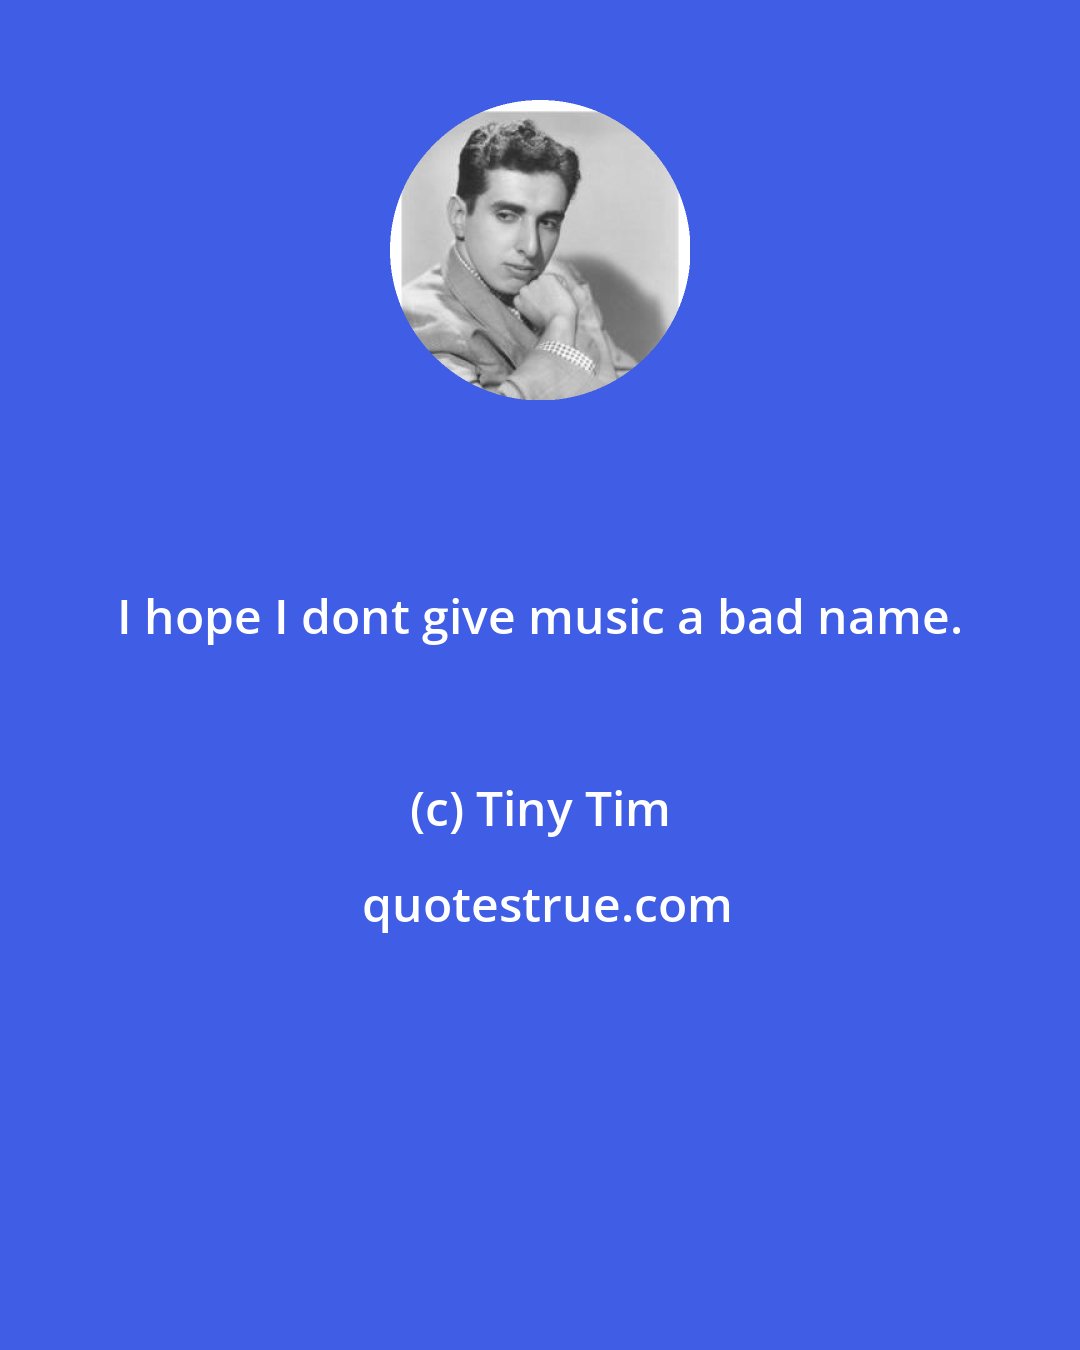 Tiny Tim: I hope I dont give music a bad name.